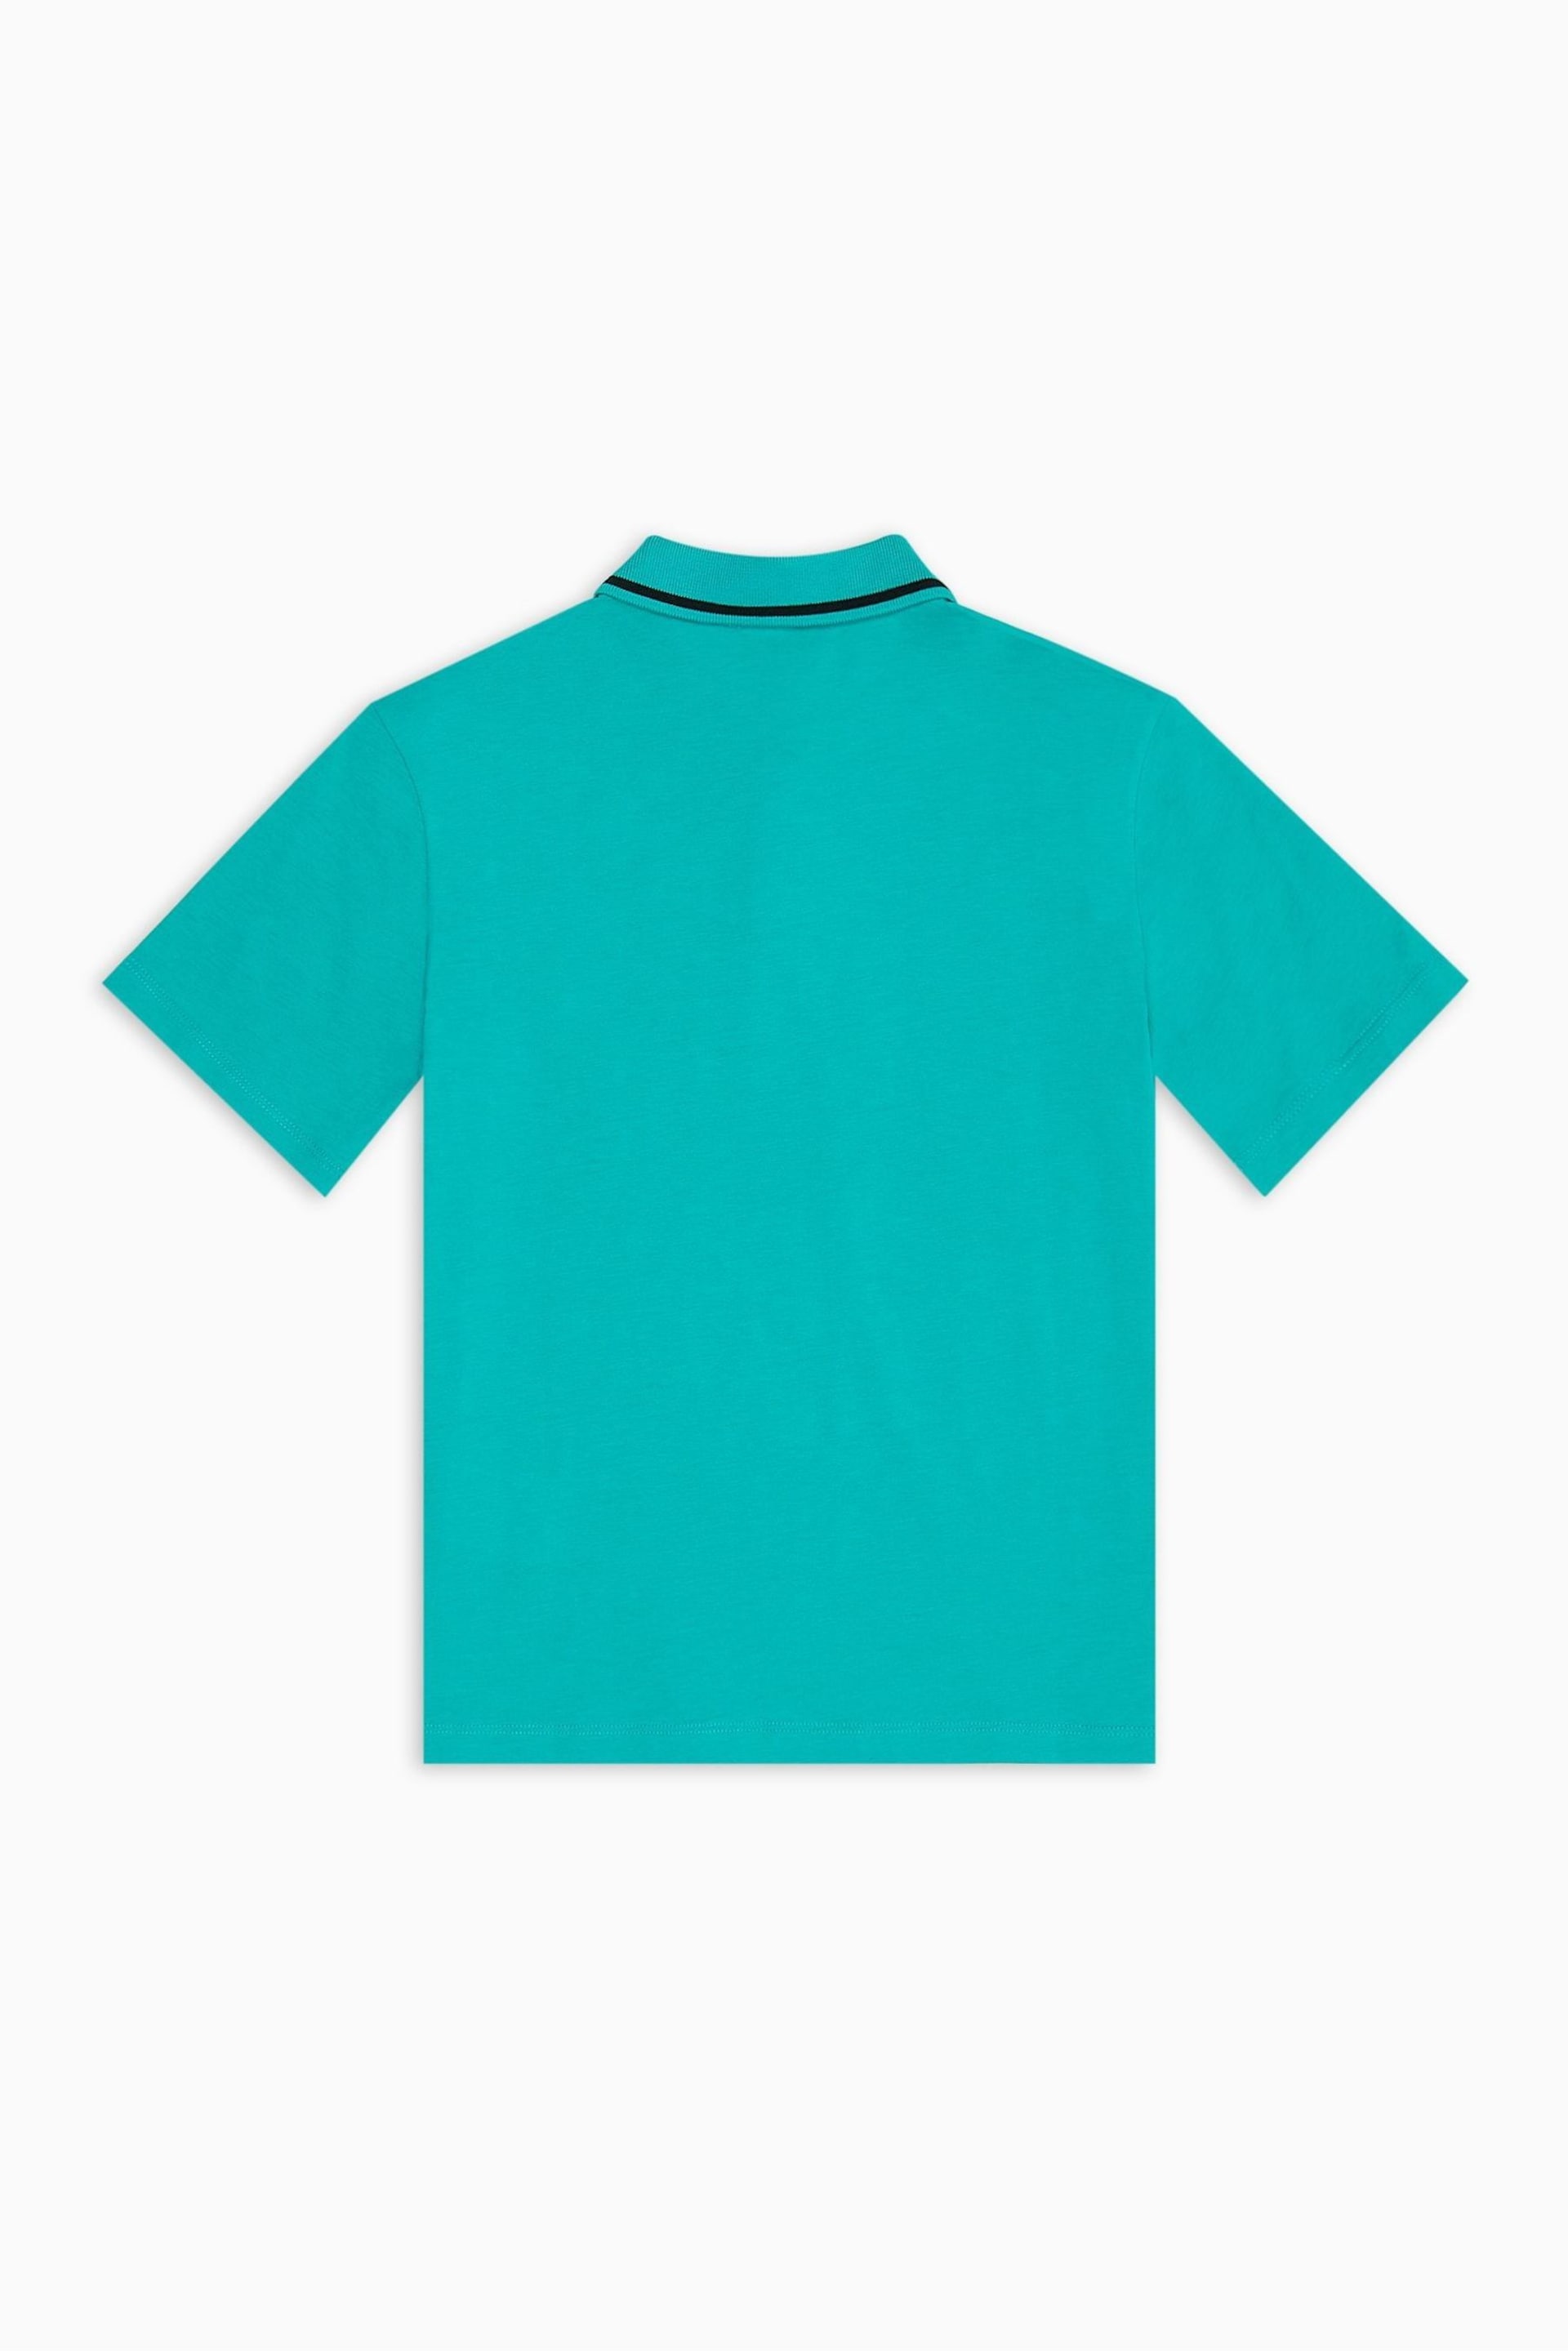 Emporio Armani EA7 Boys Core ID Polo Shirt - Image 2 of 3